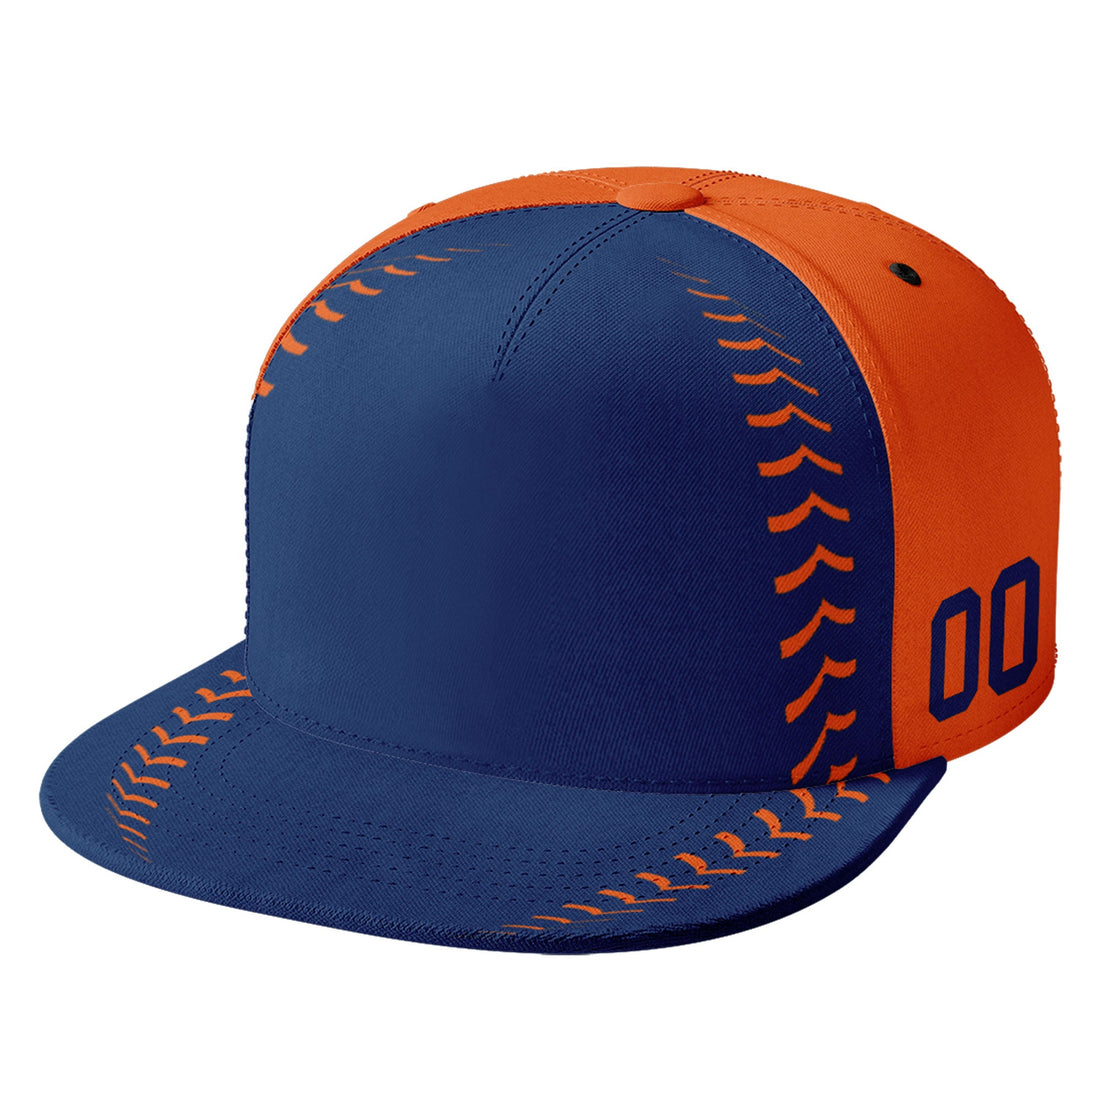 Custom Sport Design Hat Stitched Adjustable Snapback Personalized Baseball Cap PR067B-bd0b00d9-a